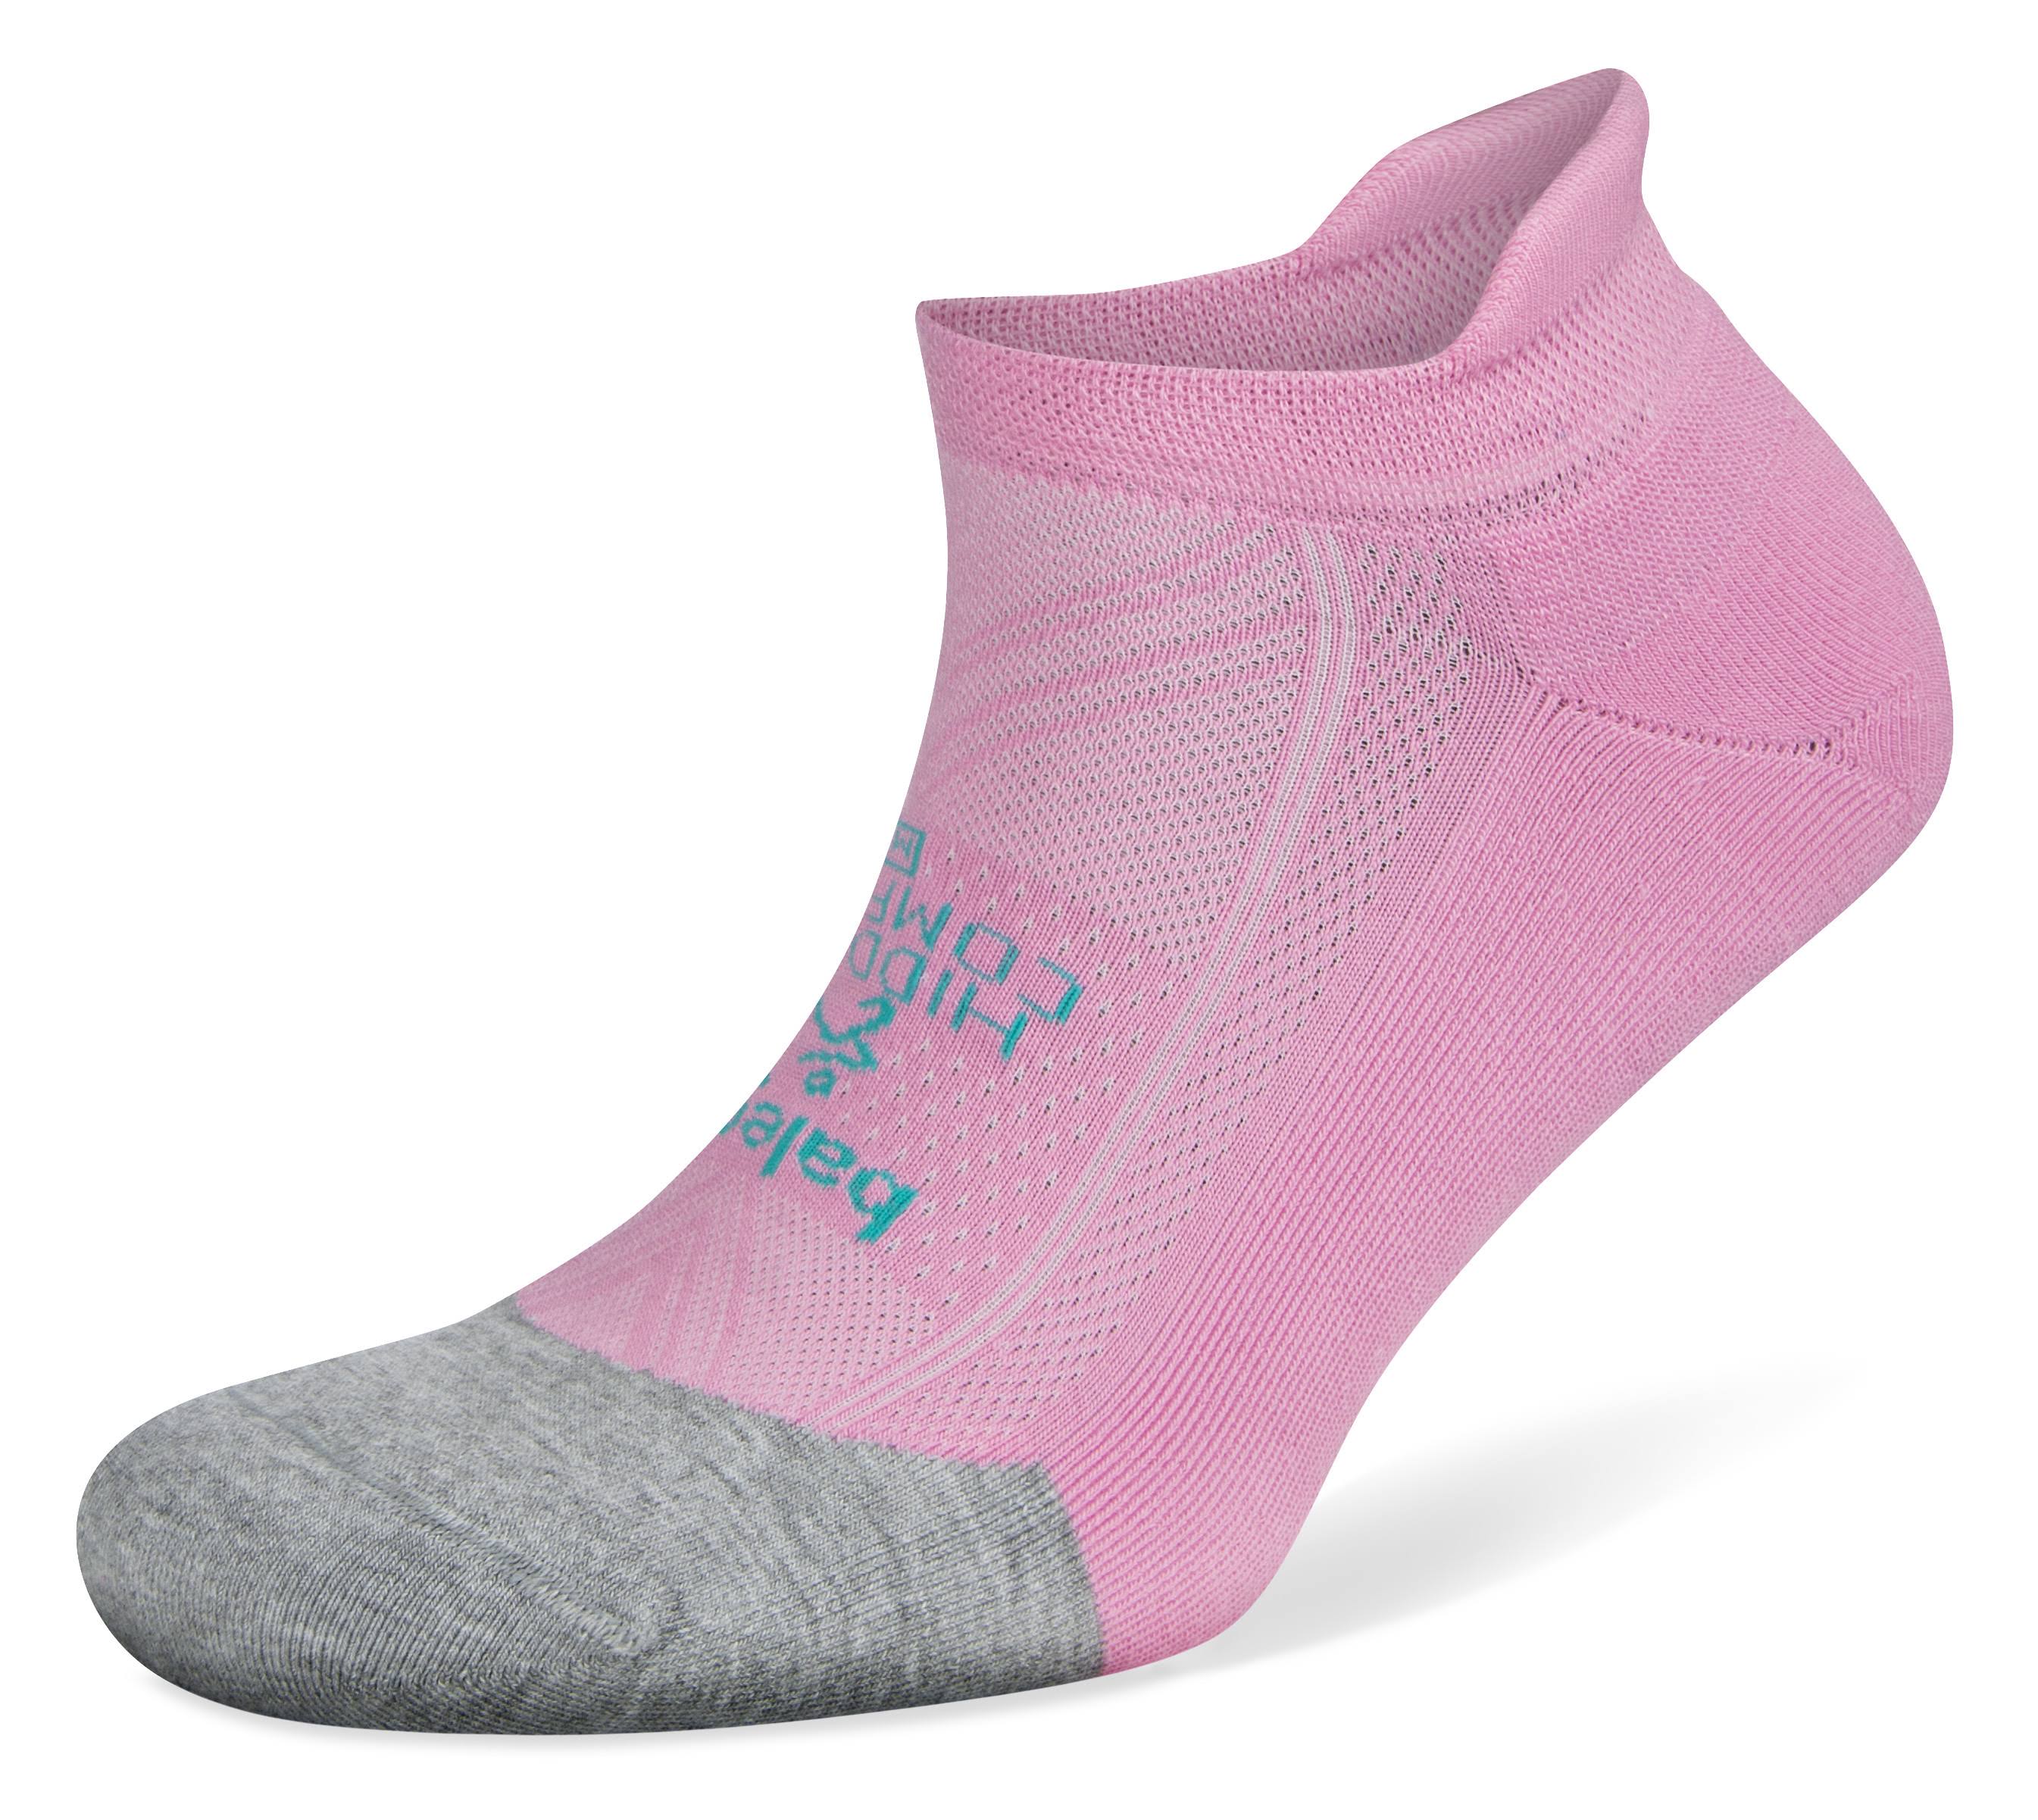 Balega Hidden Comfort Socks - Midgrey/Candyfloss, Small